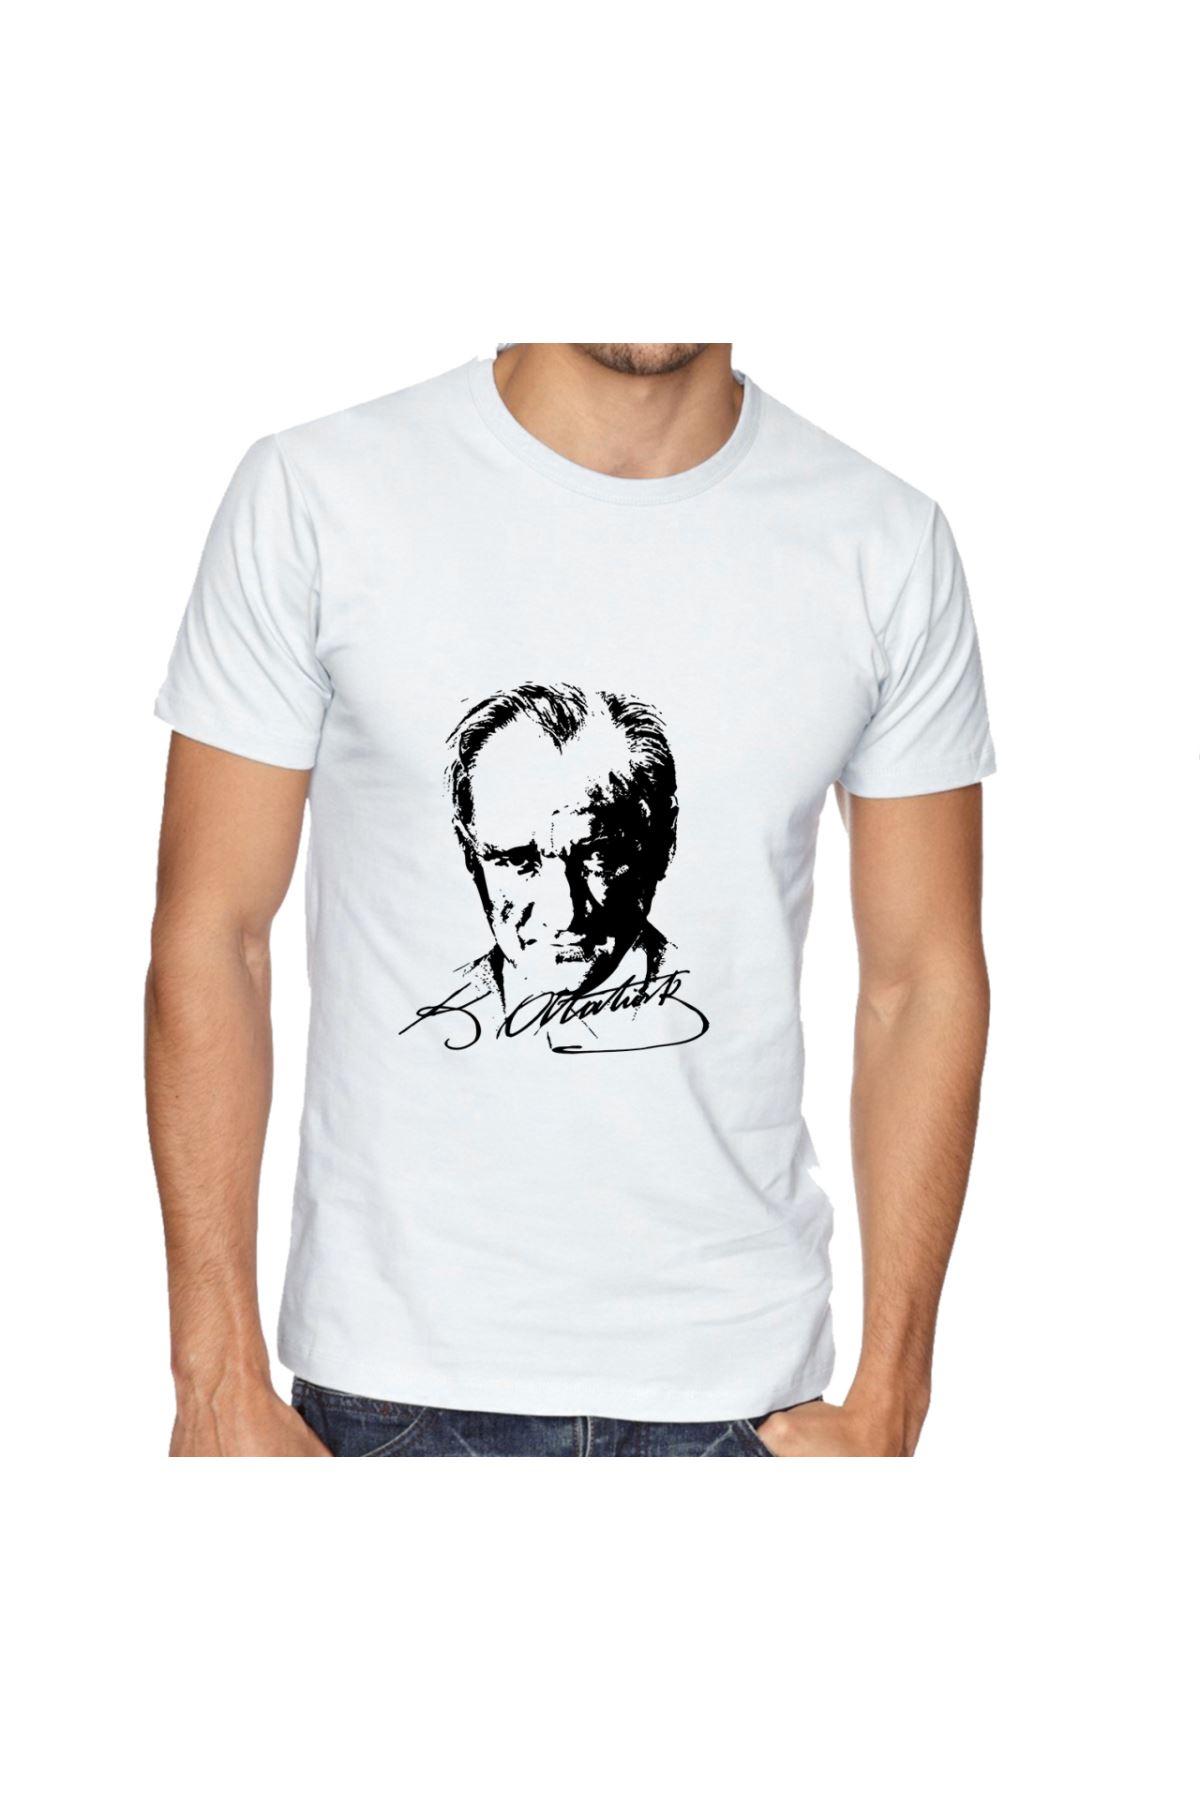 Beyaz Çift Taraf Atatürk Baskılı S-M-L-XL  Pamuklu Tişört